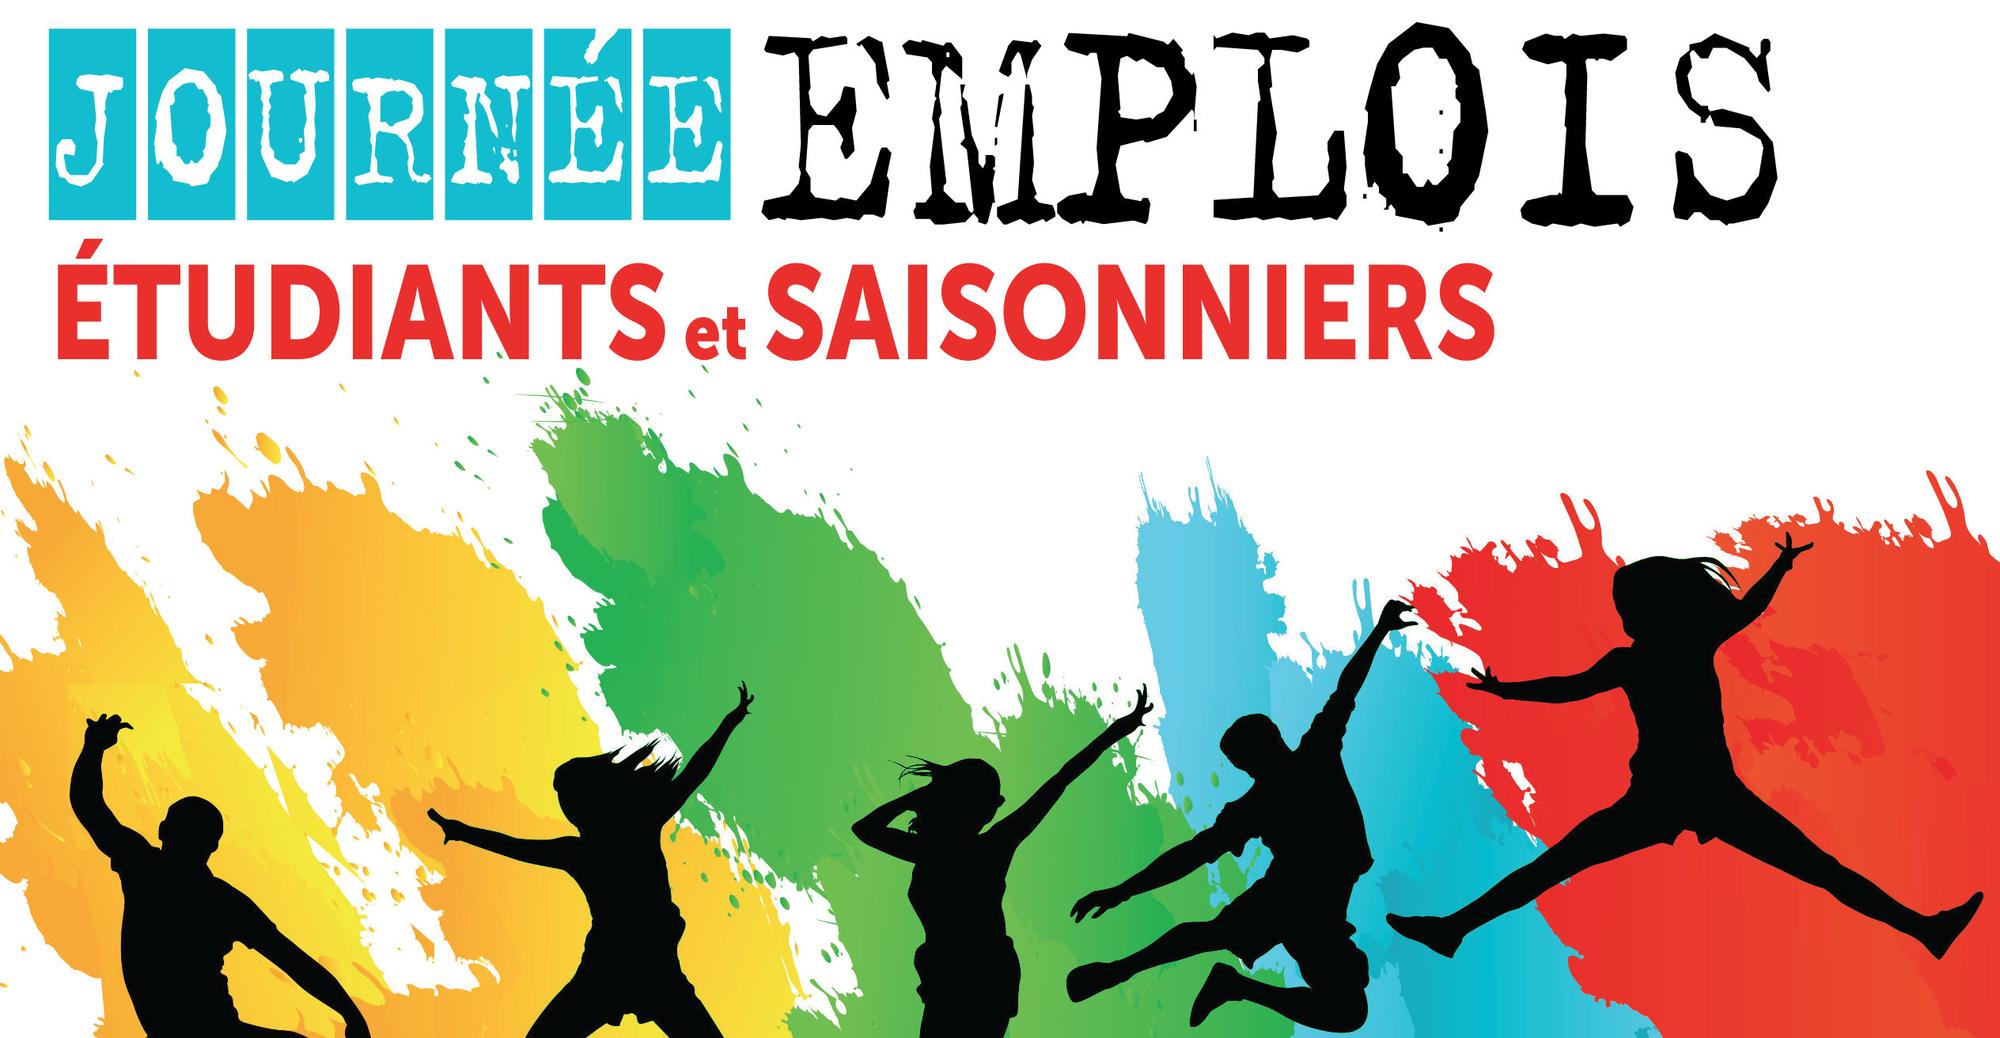 Seasonal and student job fair in Vaudreuil-Soulanges